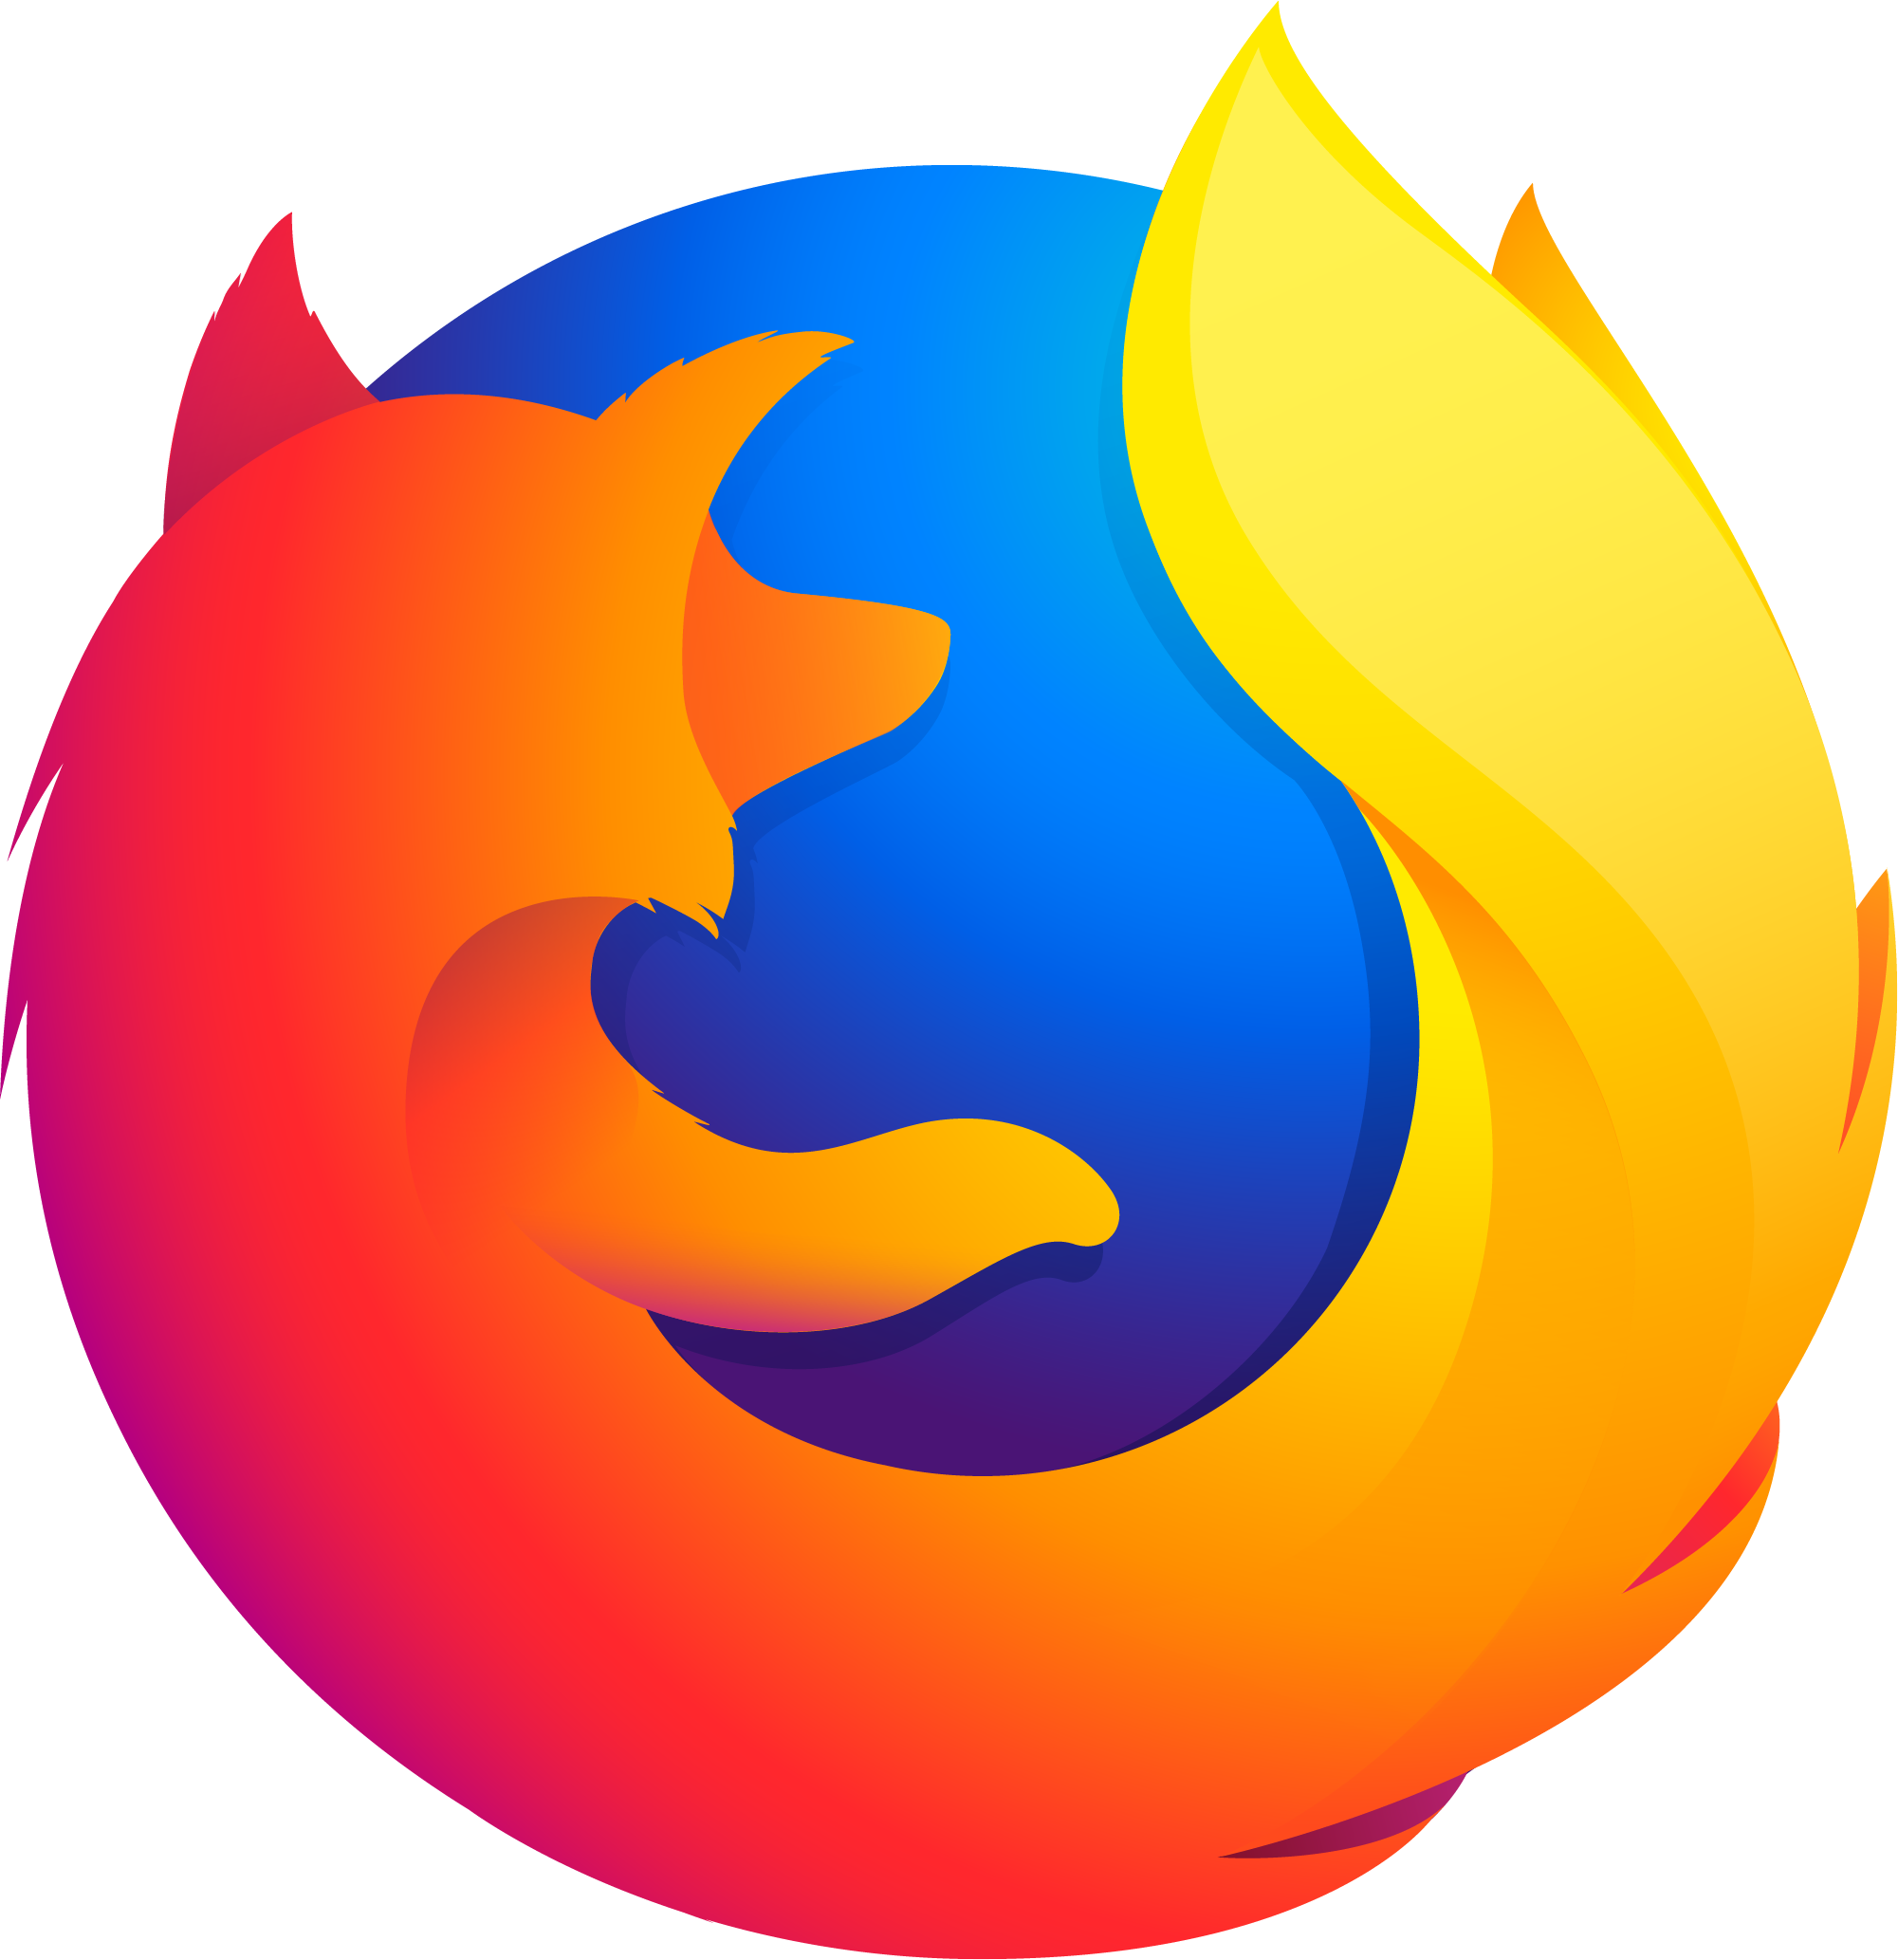 Mozilla Firefox logo, shows fox in curved shape